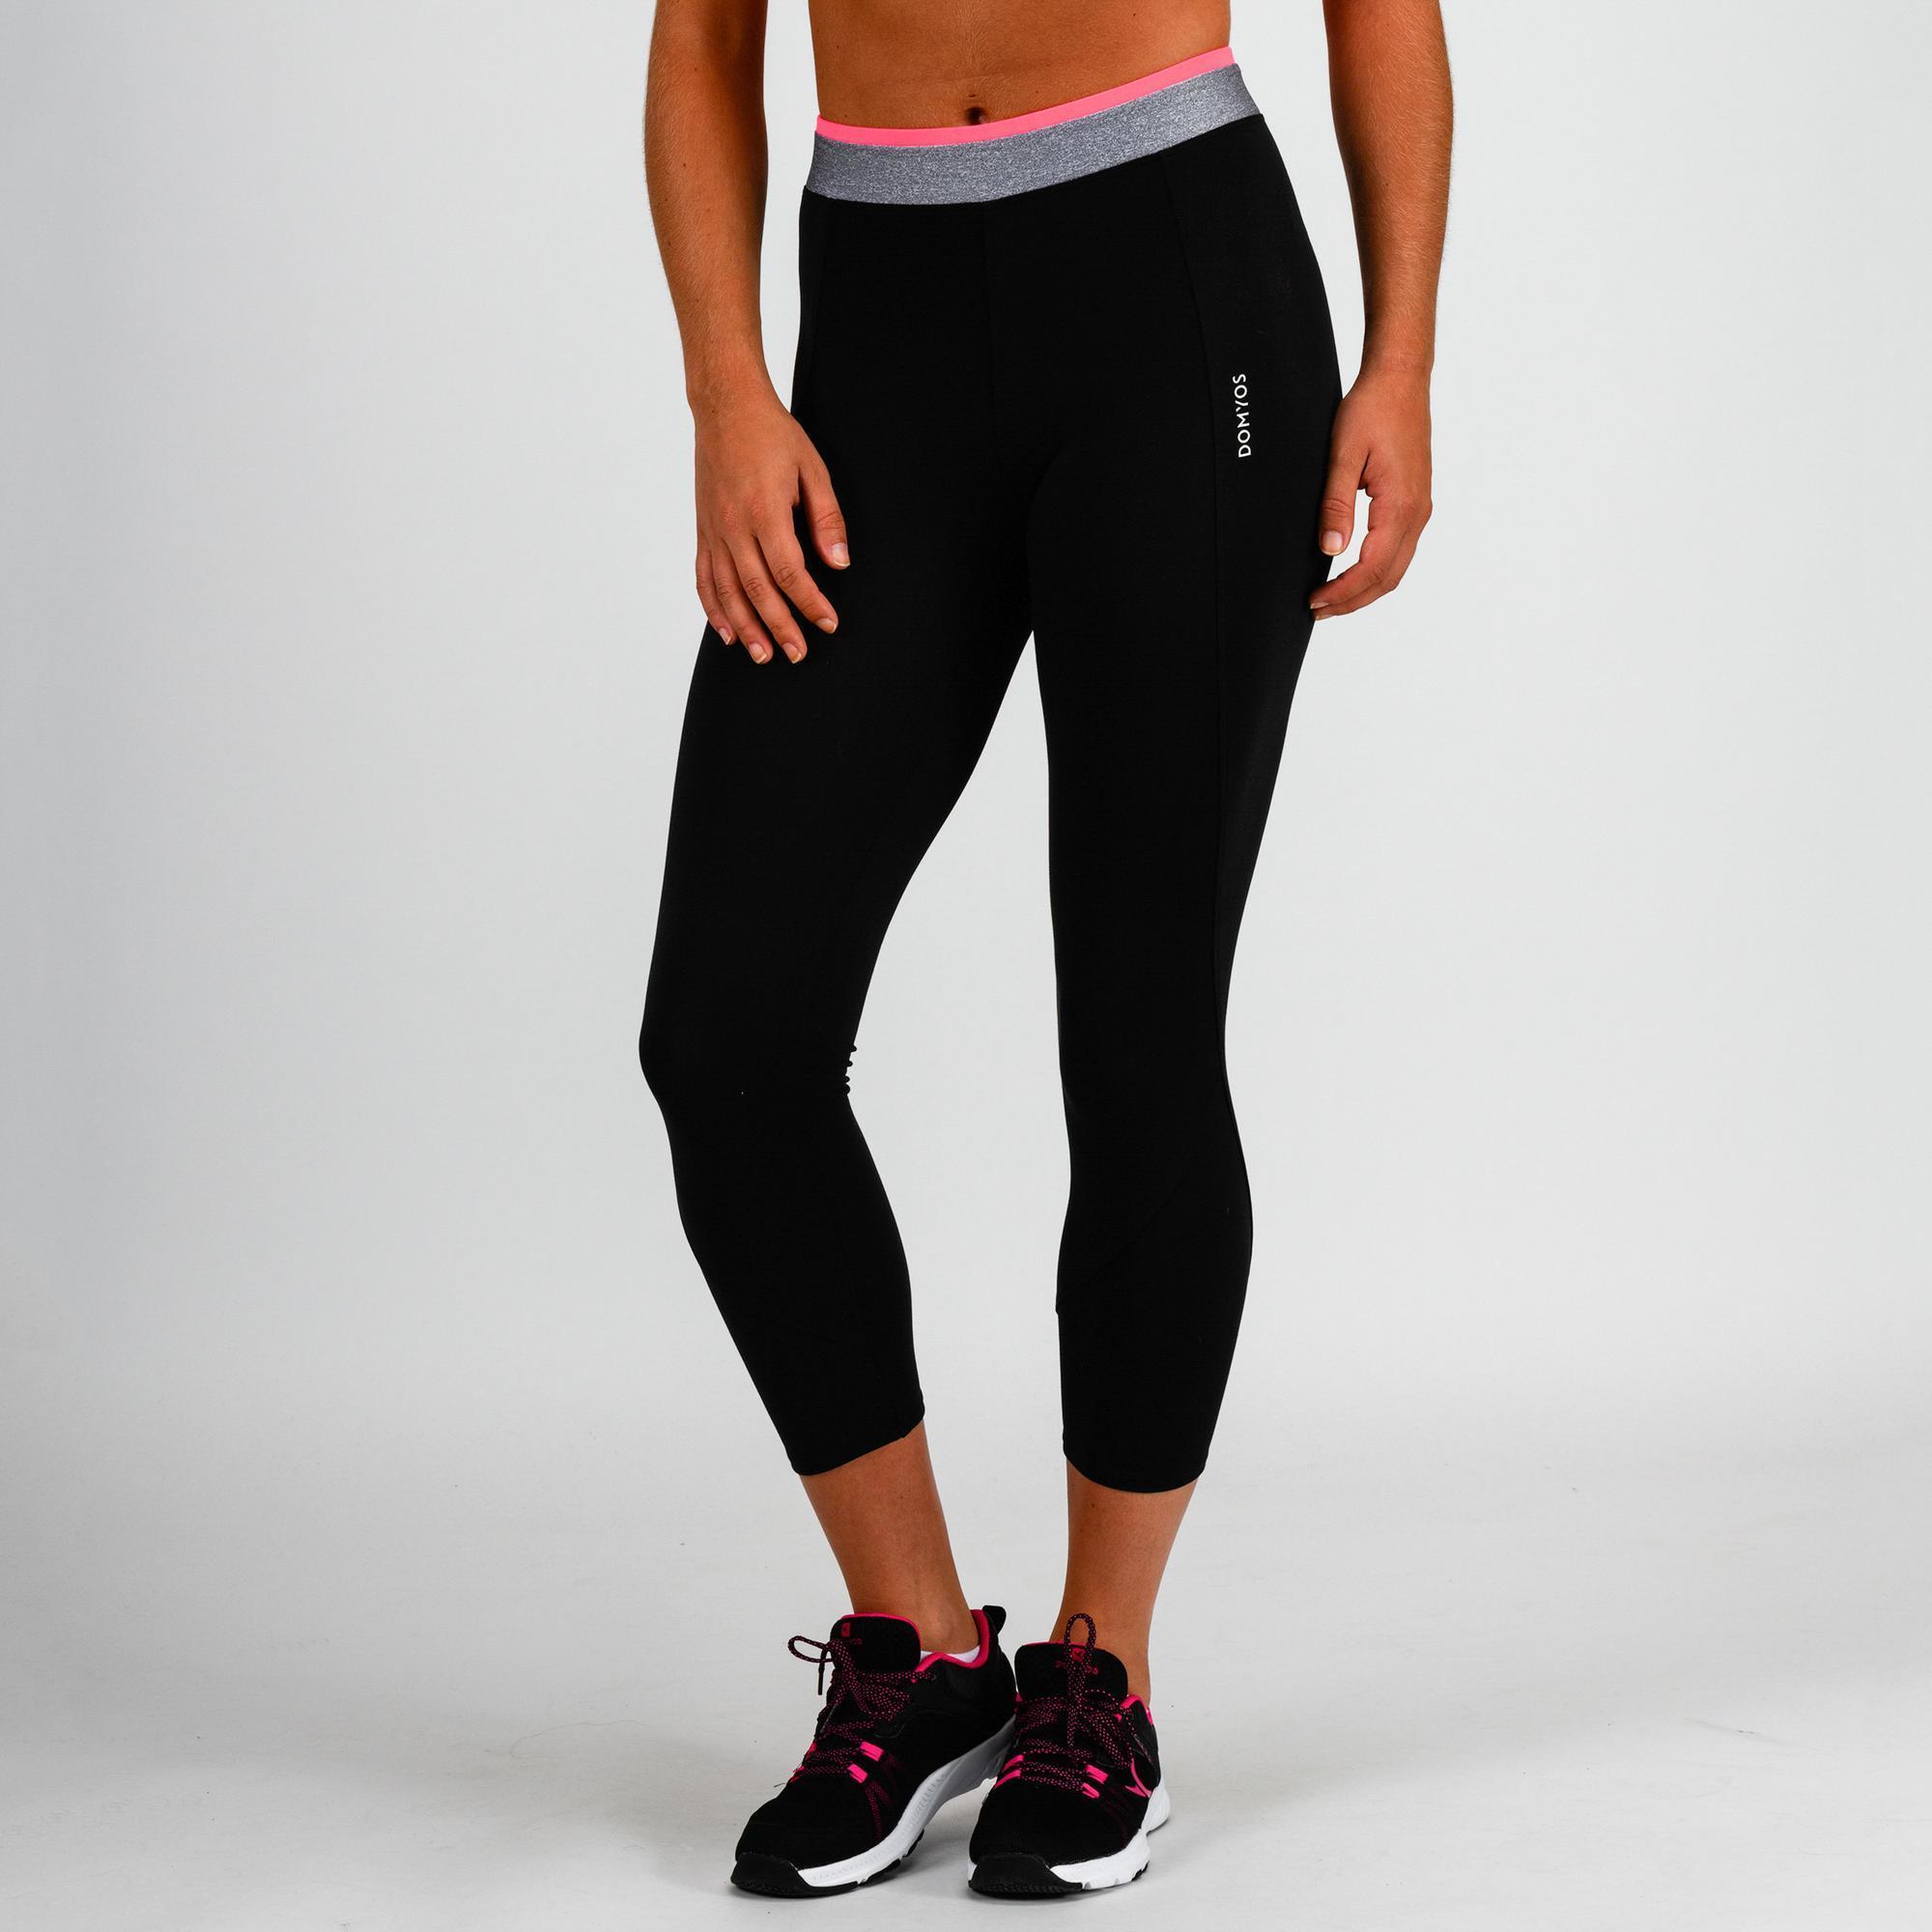 Women's Fitness Capri Leggings - 520 - Mahogany brown - Domyos - Decathlon